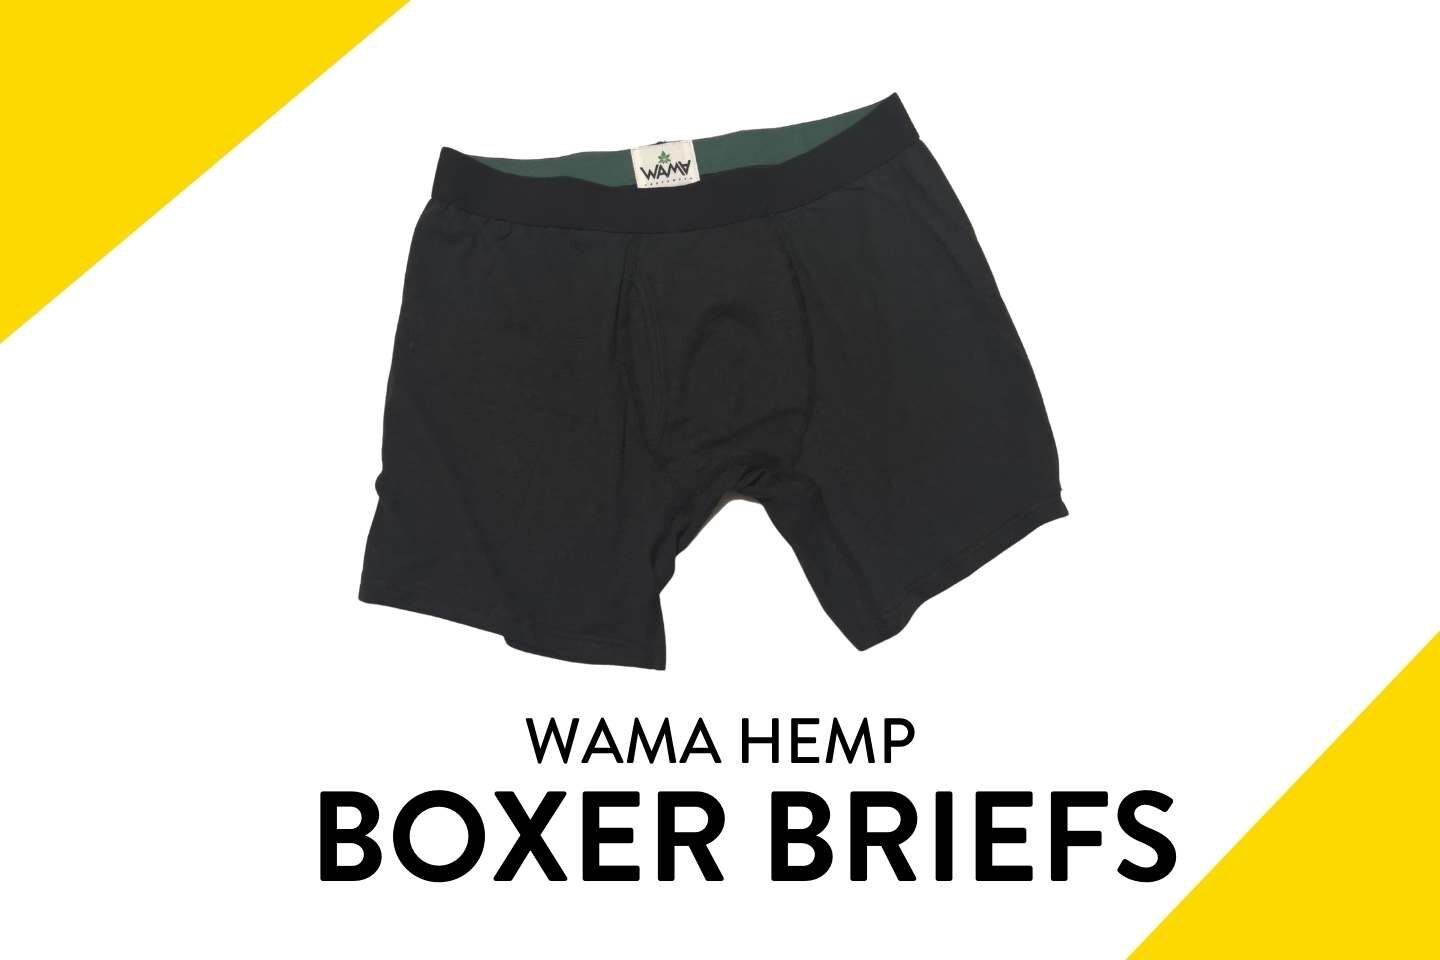 WAMA boxer briefs